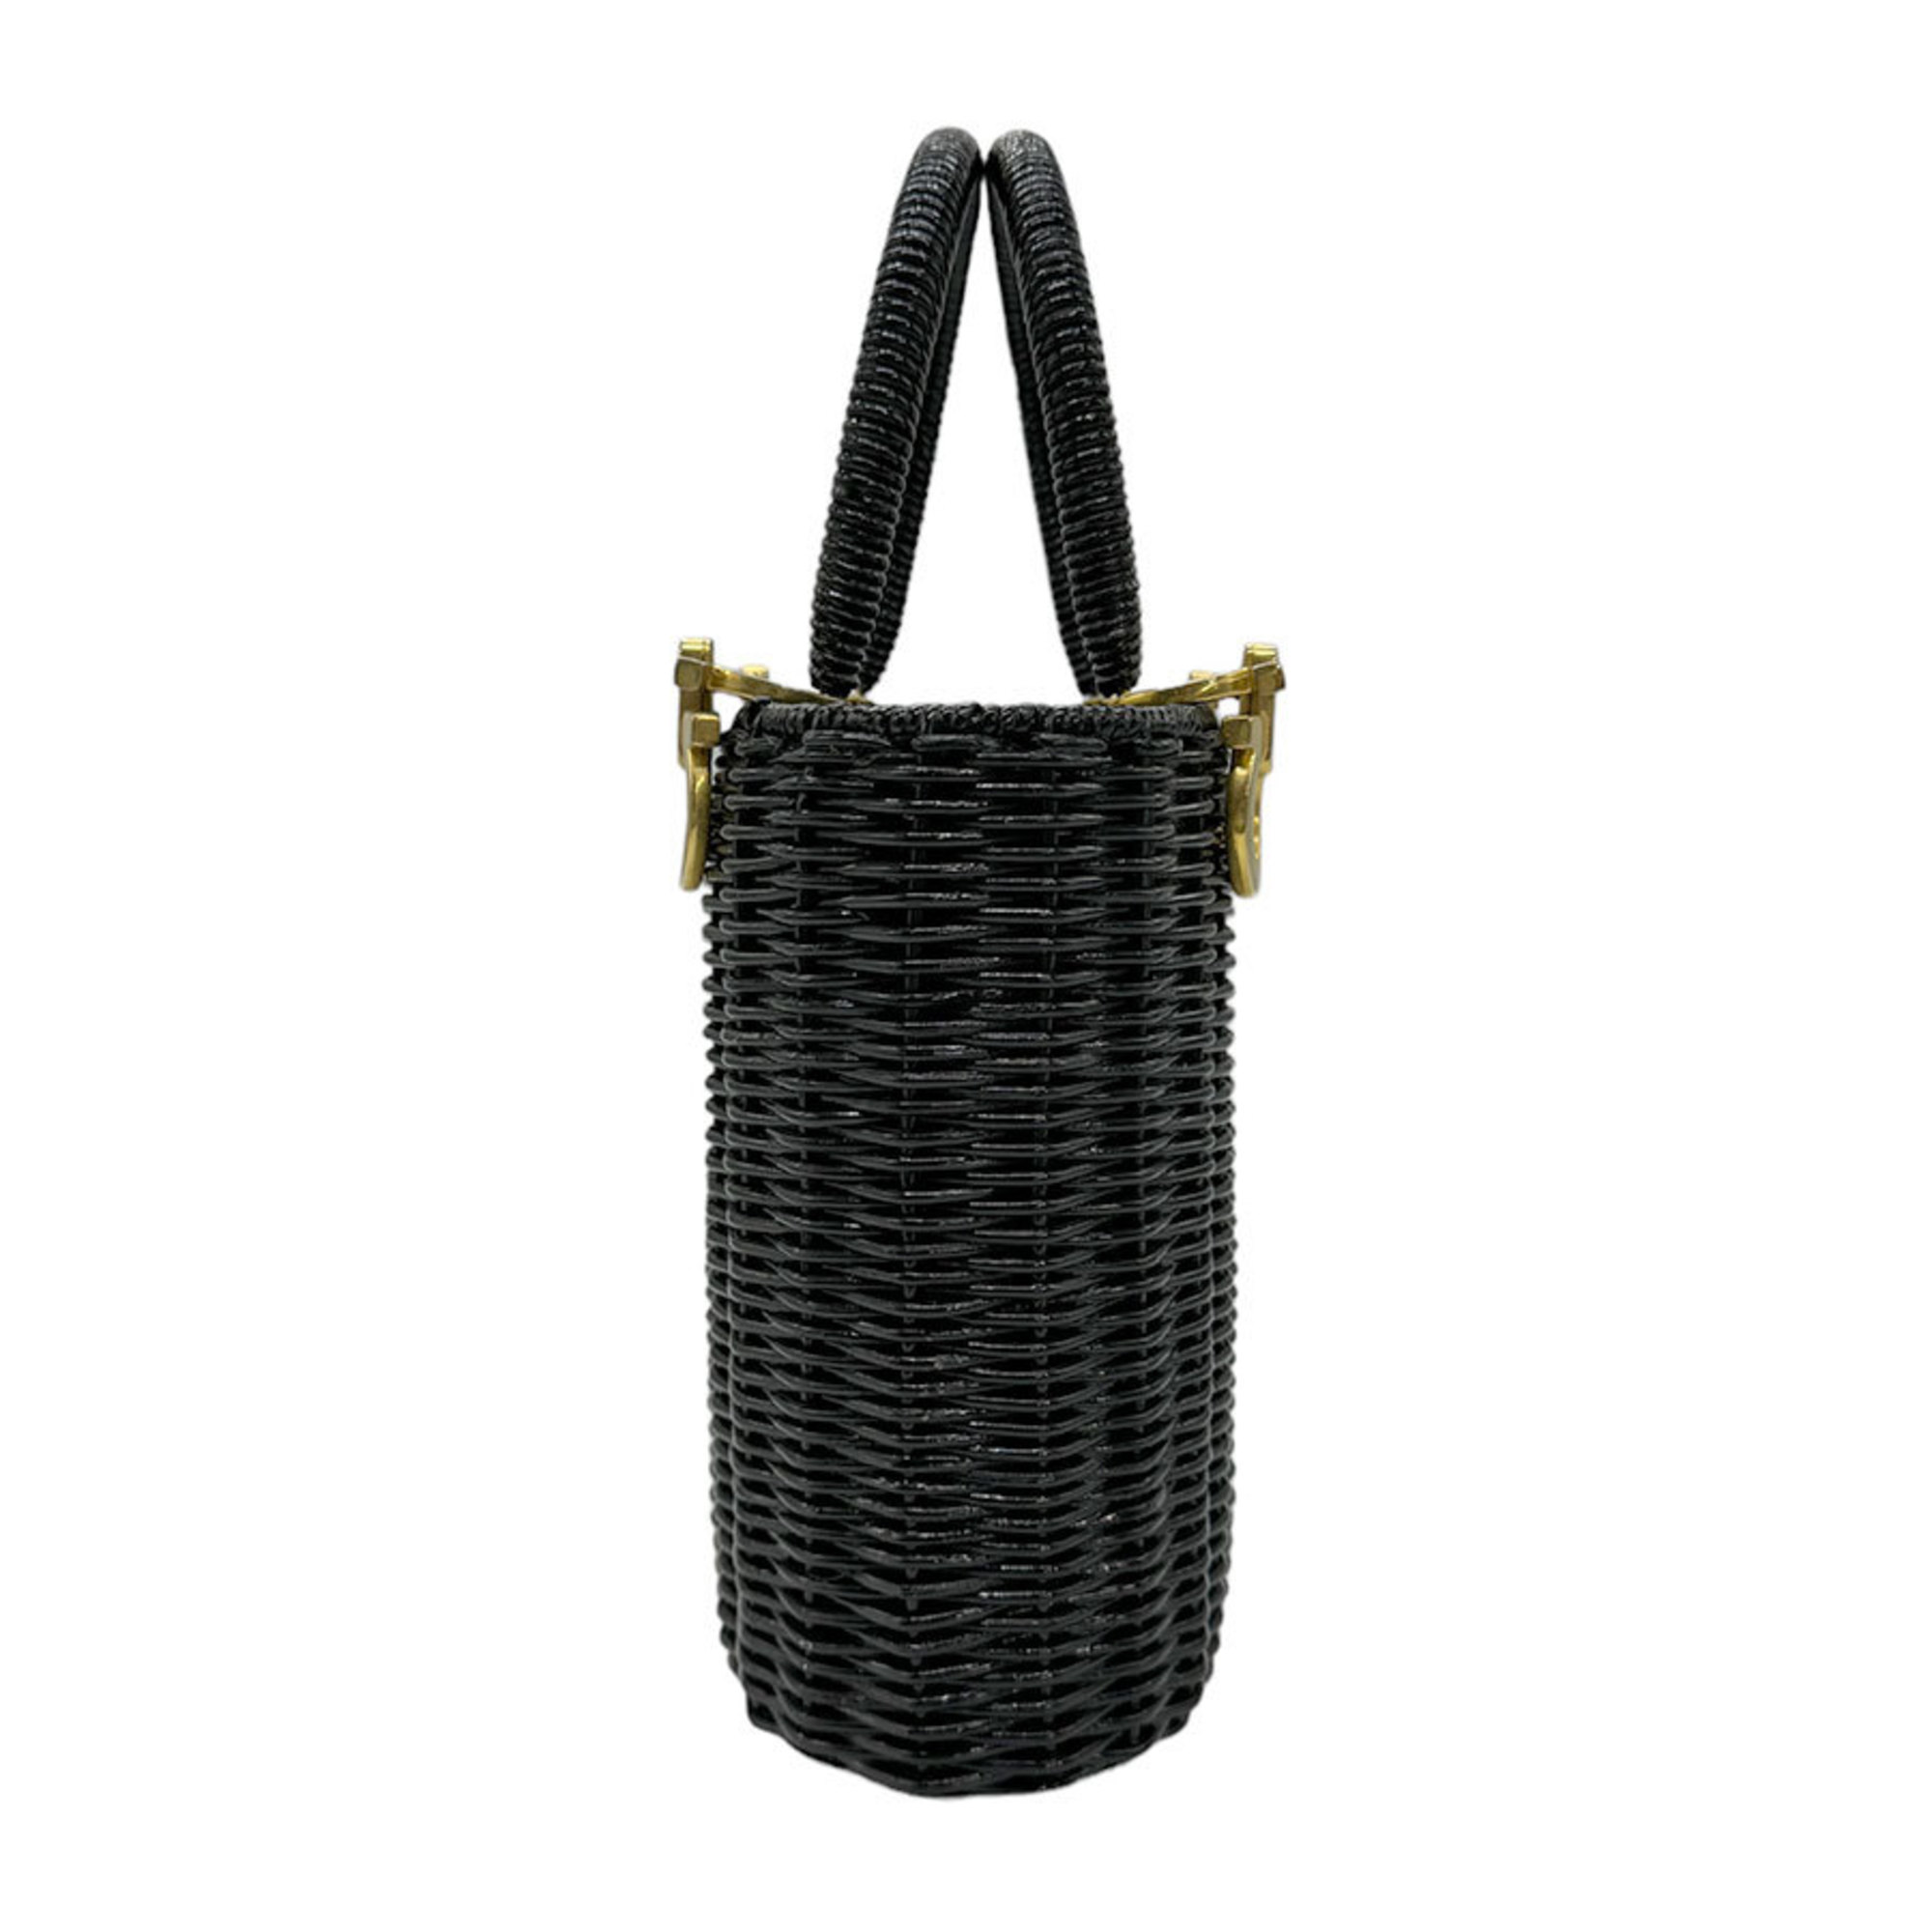 Salvatore Ferragamo Handbag Basket Bag/Rattan Black Women's z0597